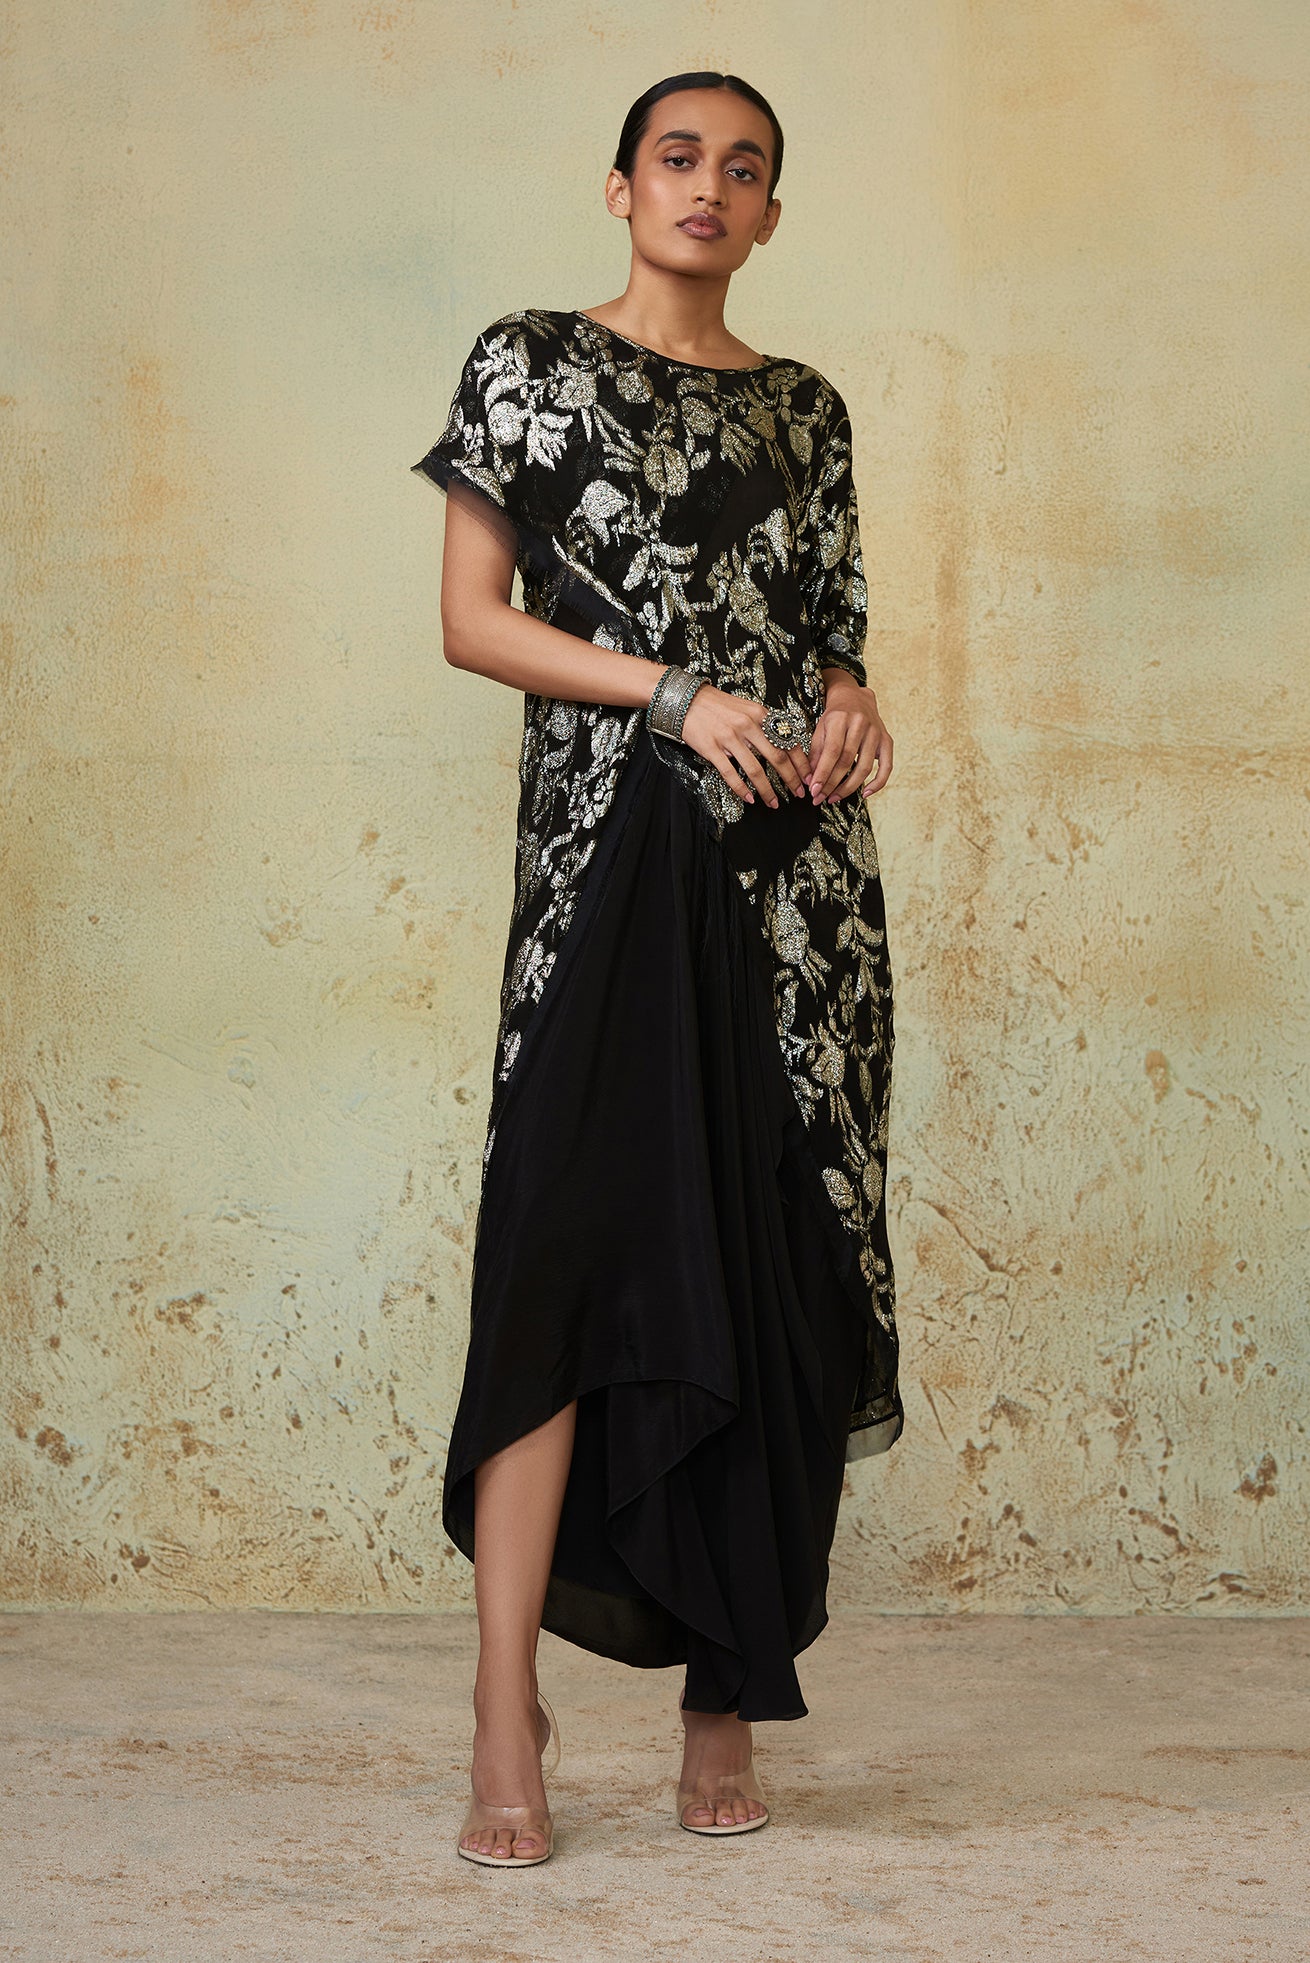 Buy Kaftan Dresses Online - Indian Cotton Kaftans For Women